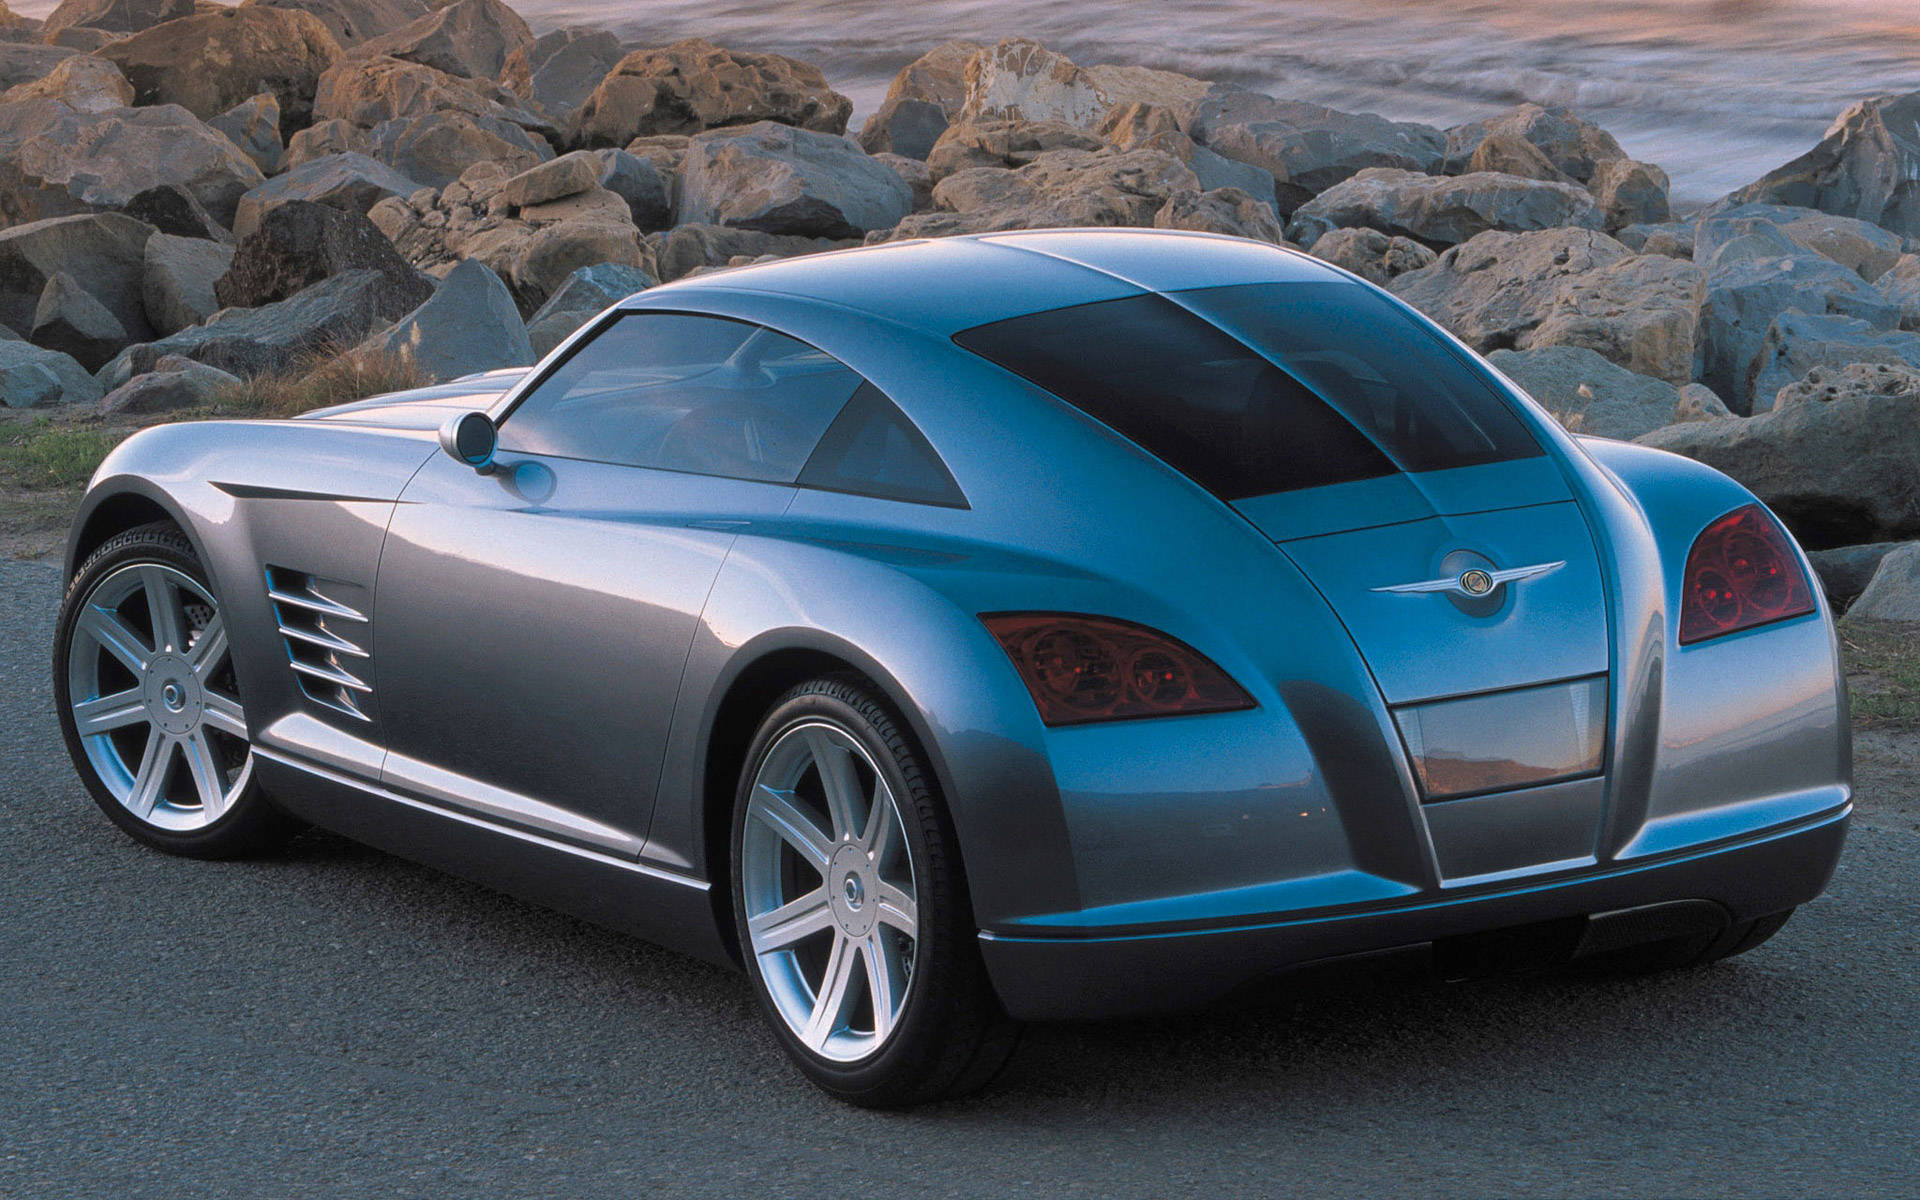 Elegance In Movement - The 2004 Chrysler Crossfire